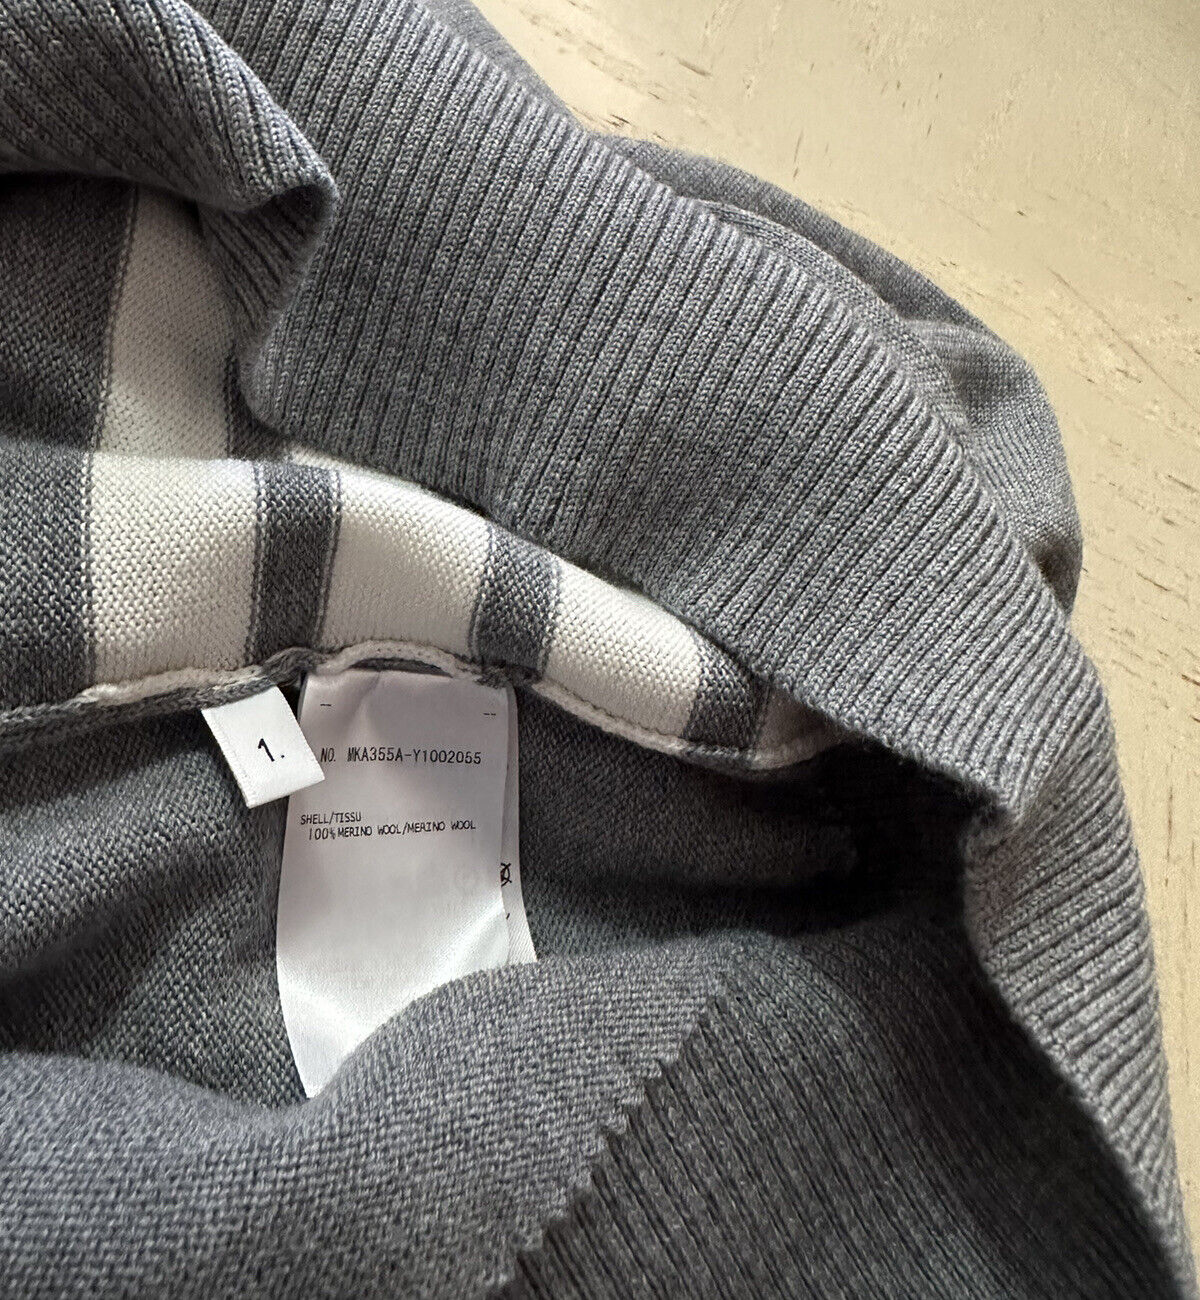 NWT Thom Browne Men’s Heathered Merino Wool Sweater Gray Size 1 ( S )